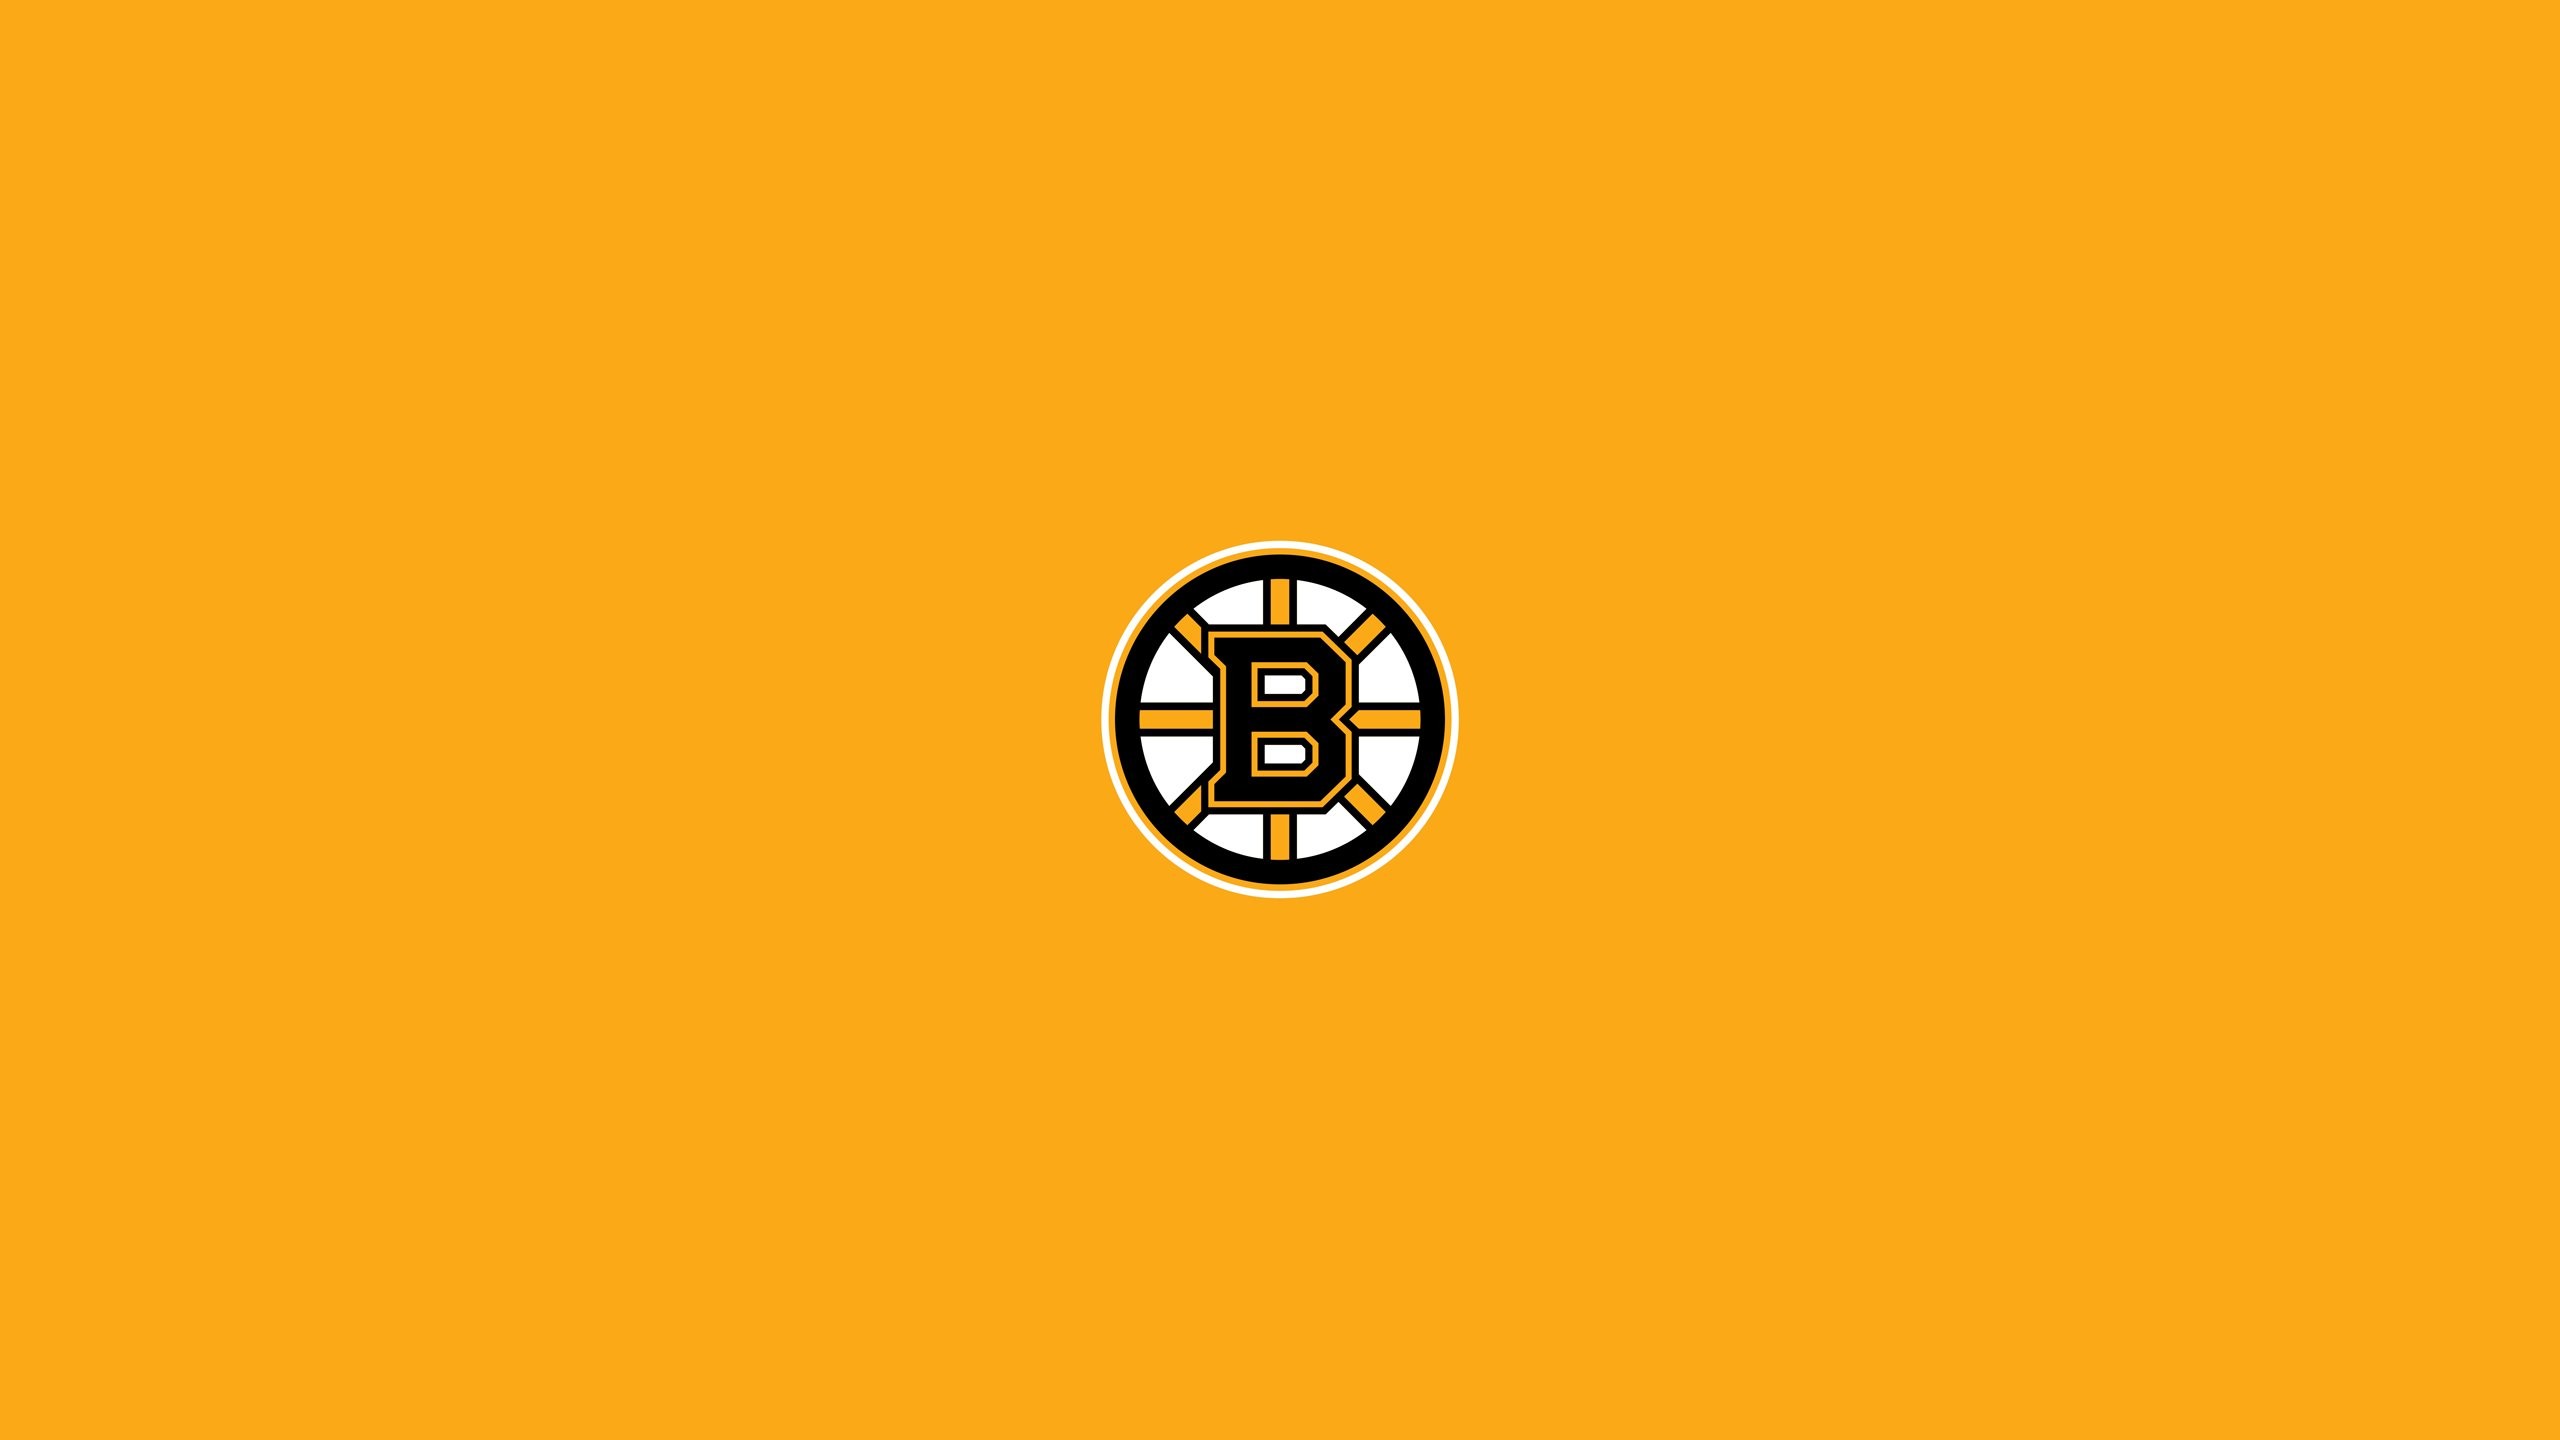 2560x1440 BOSTON BRUINS nhl hockey (3) wallpaper background